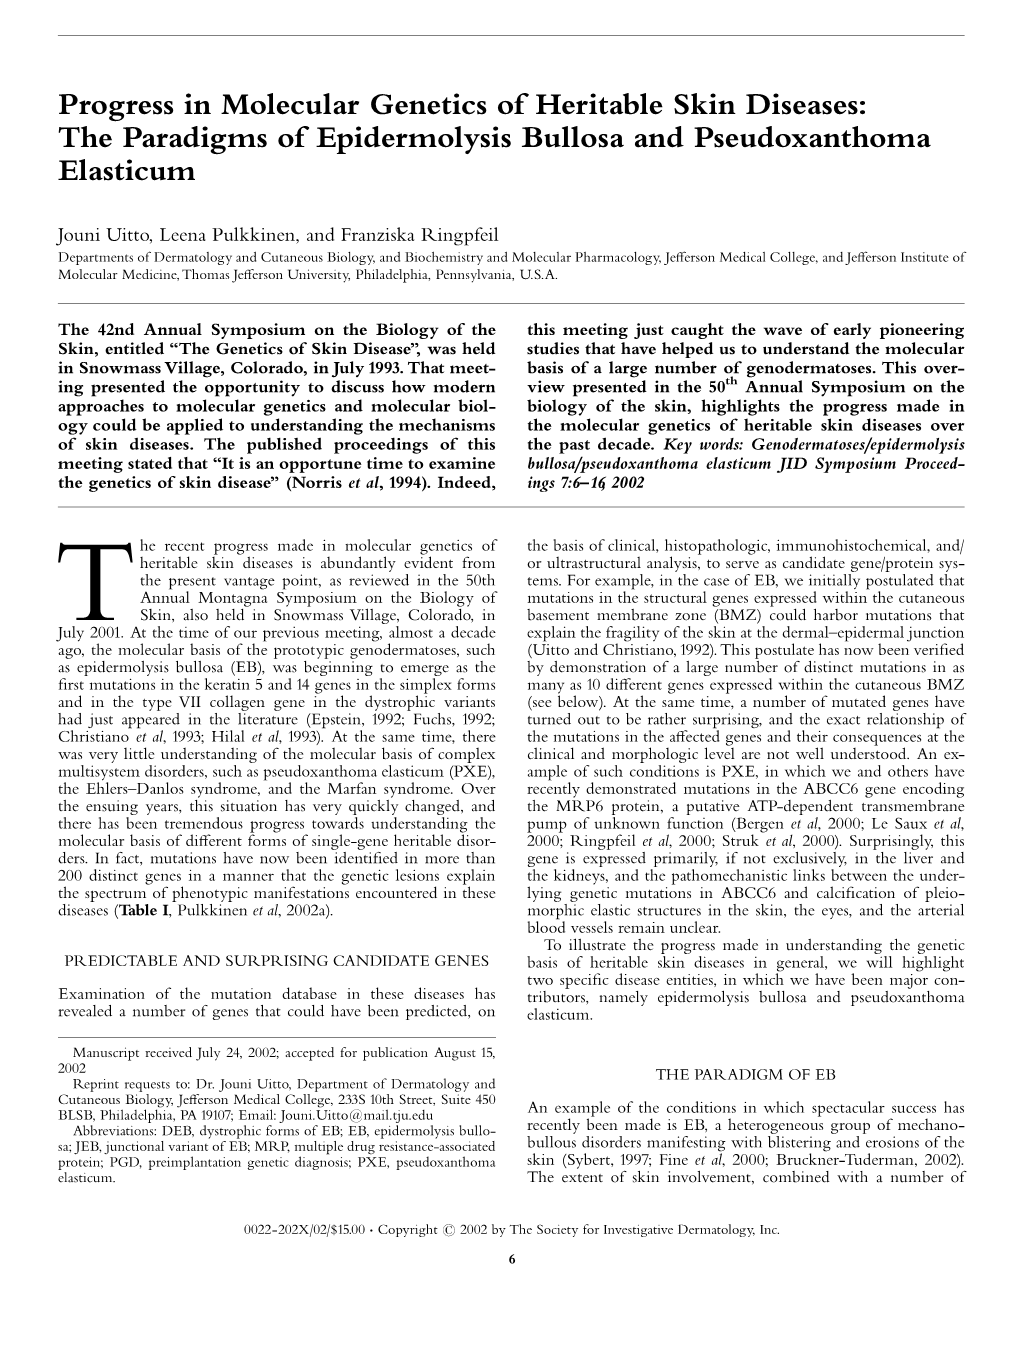 Progress in Molecular Genetics of Heritable Skin Diseases: the Paradigms of Epidermolysis Bullosa and Pseudoxanthoma Elasticum